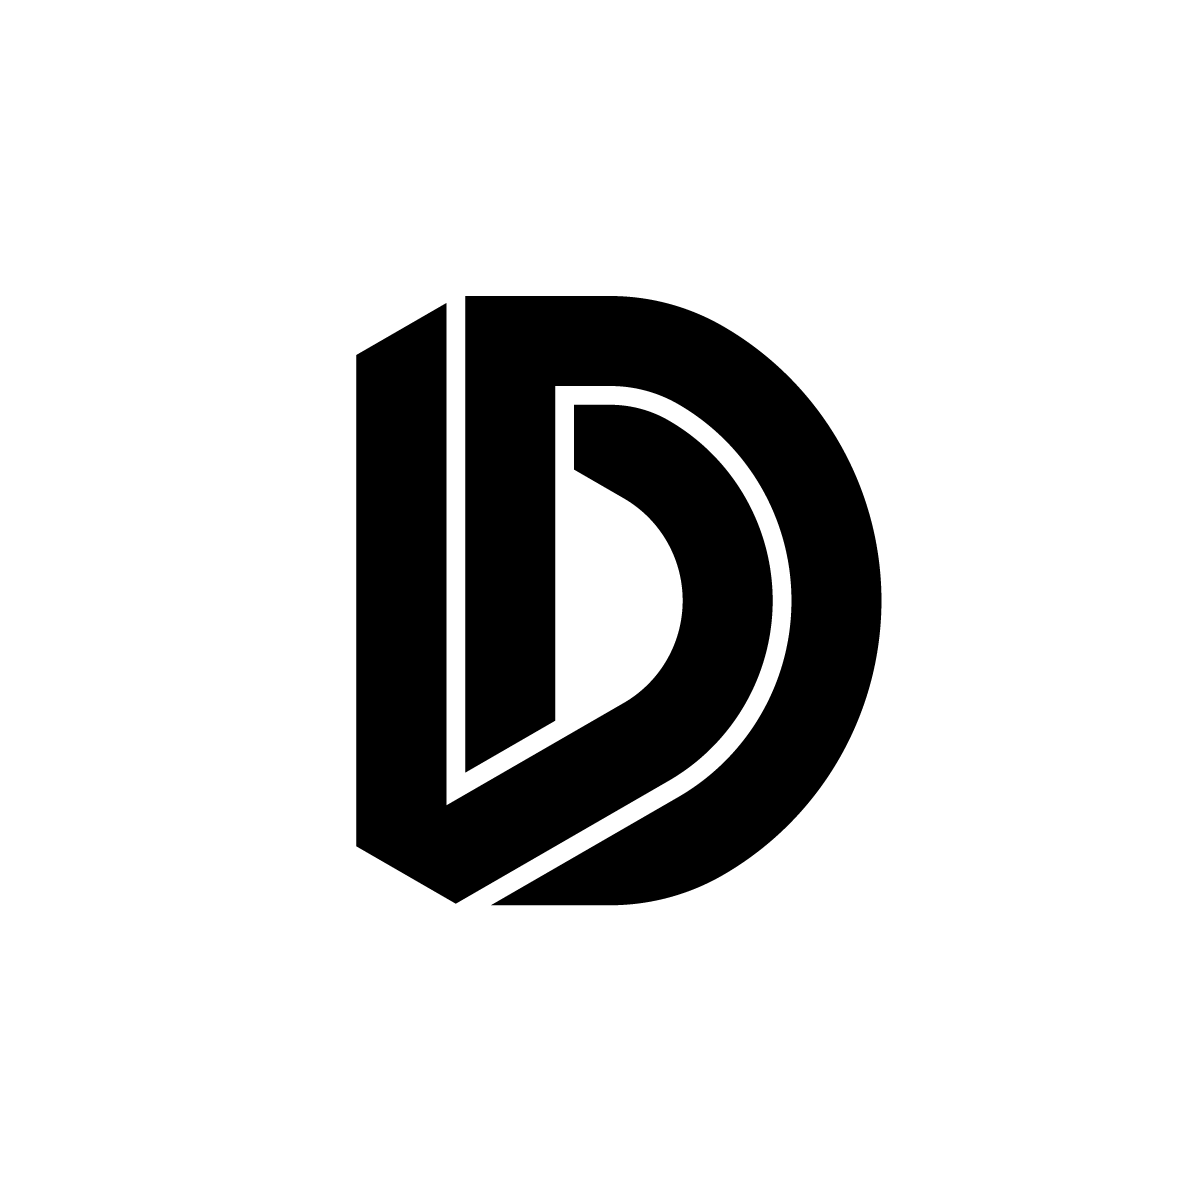 Impossible 3D D Logo: Logo built with impossible 3D shape forming letter D